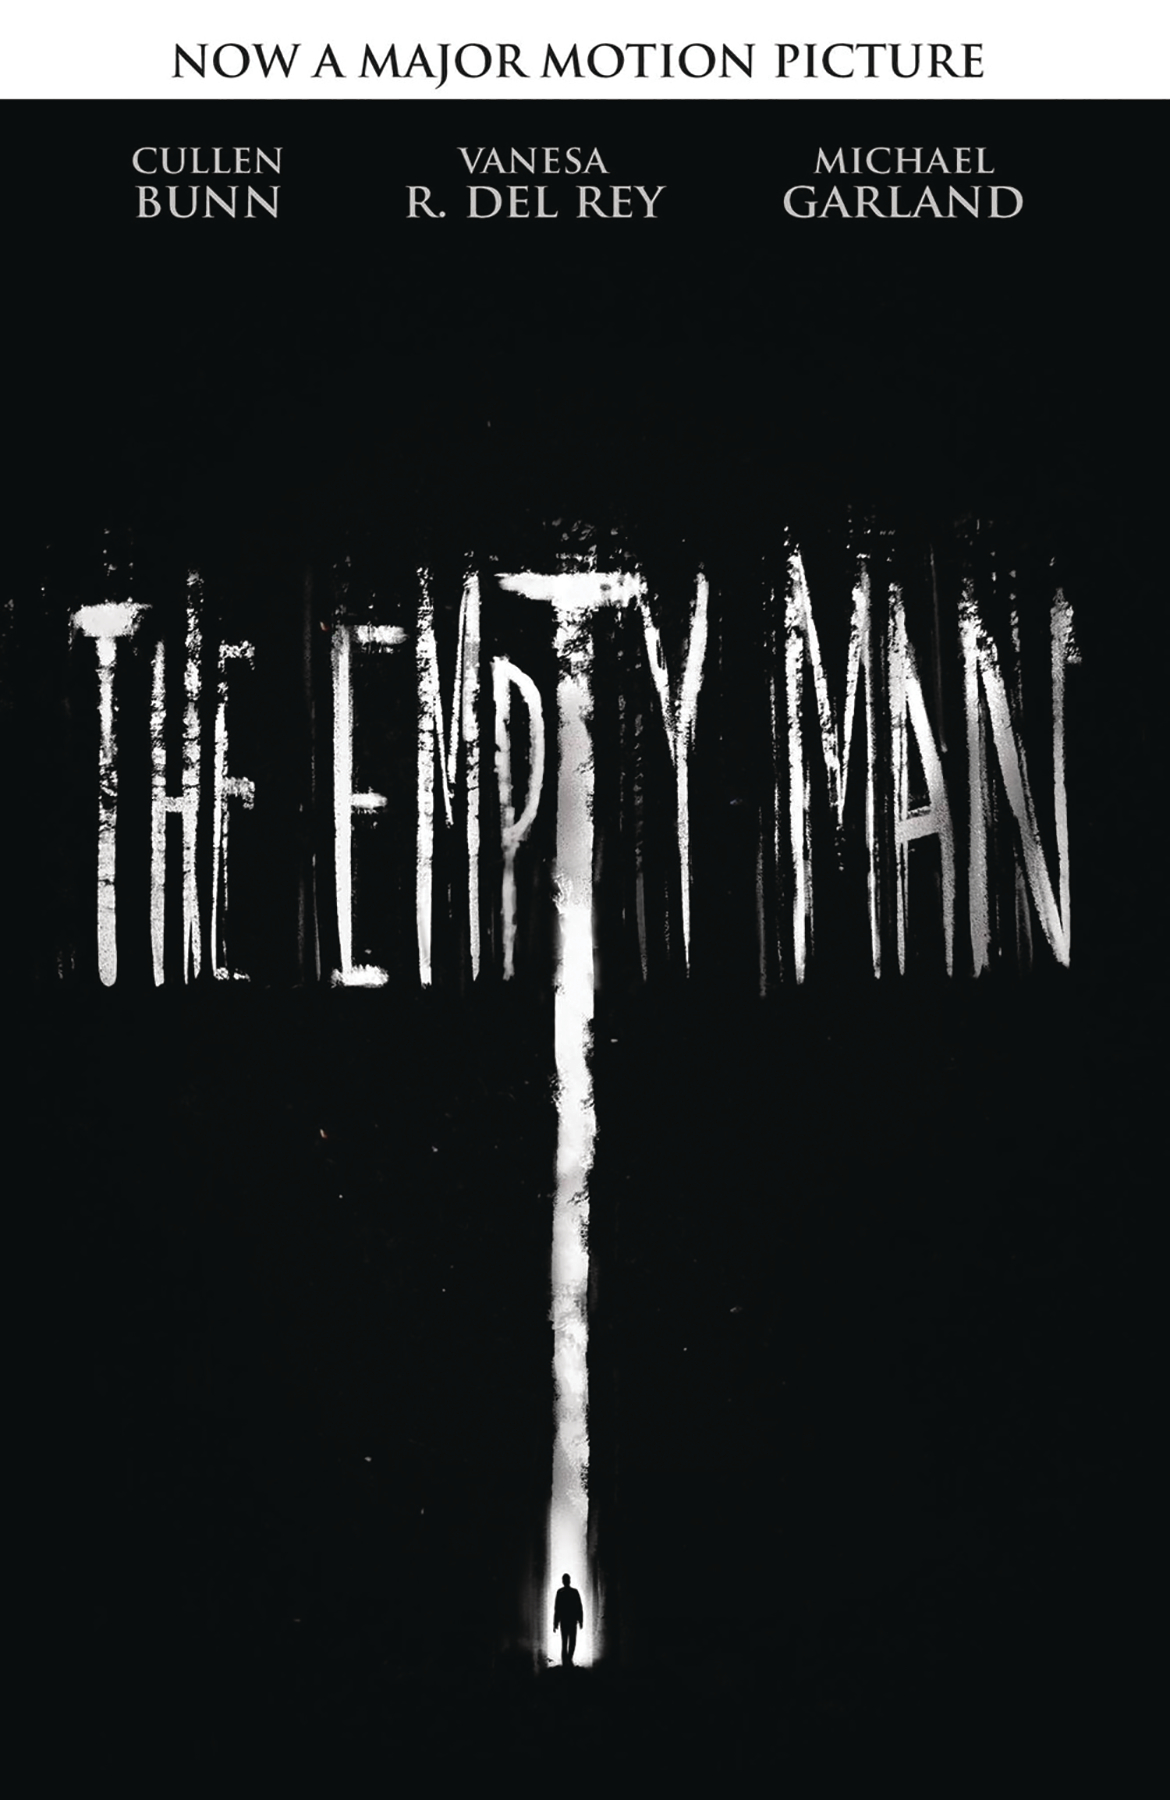 Empty Man Graphic Novel Movie Edition